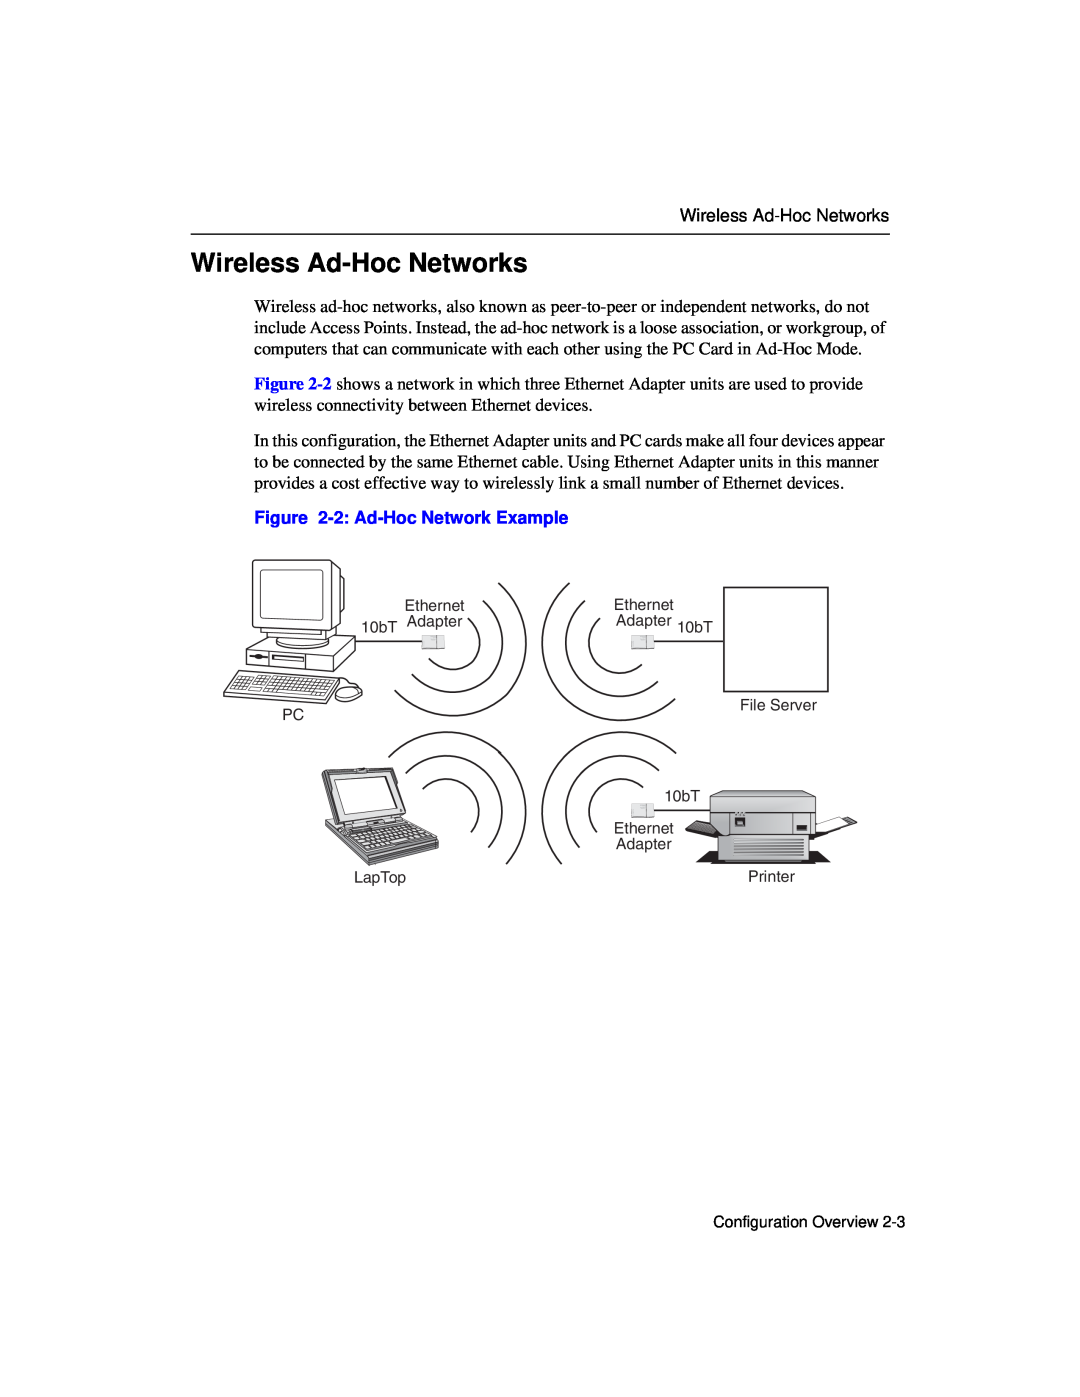 Enterasys Networks Wireless Ethernet Adapter I manual Wireless Ad-Hoc Networks, 2 Ad-Hoc Network Example 